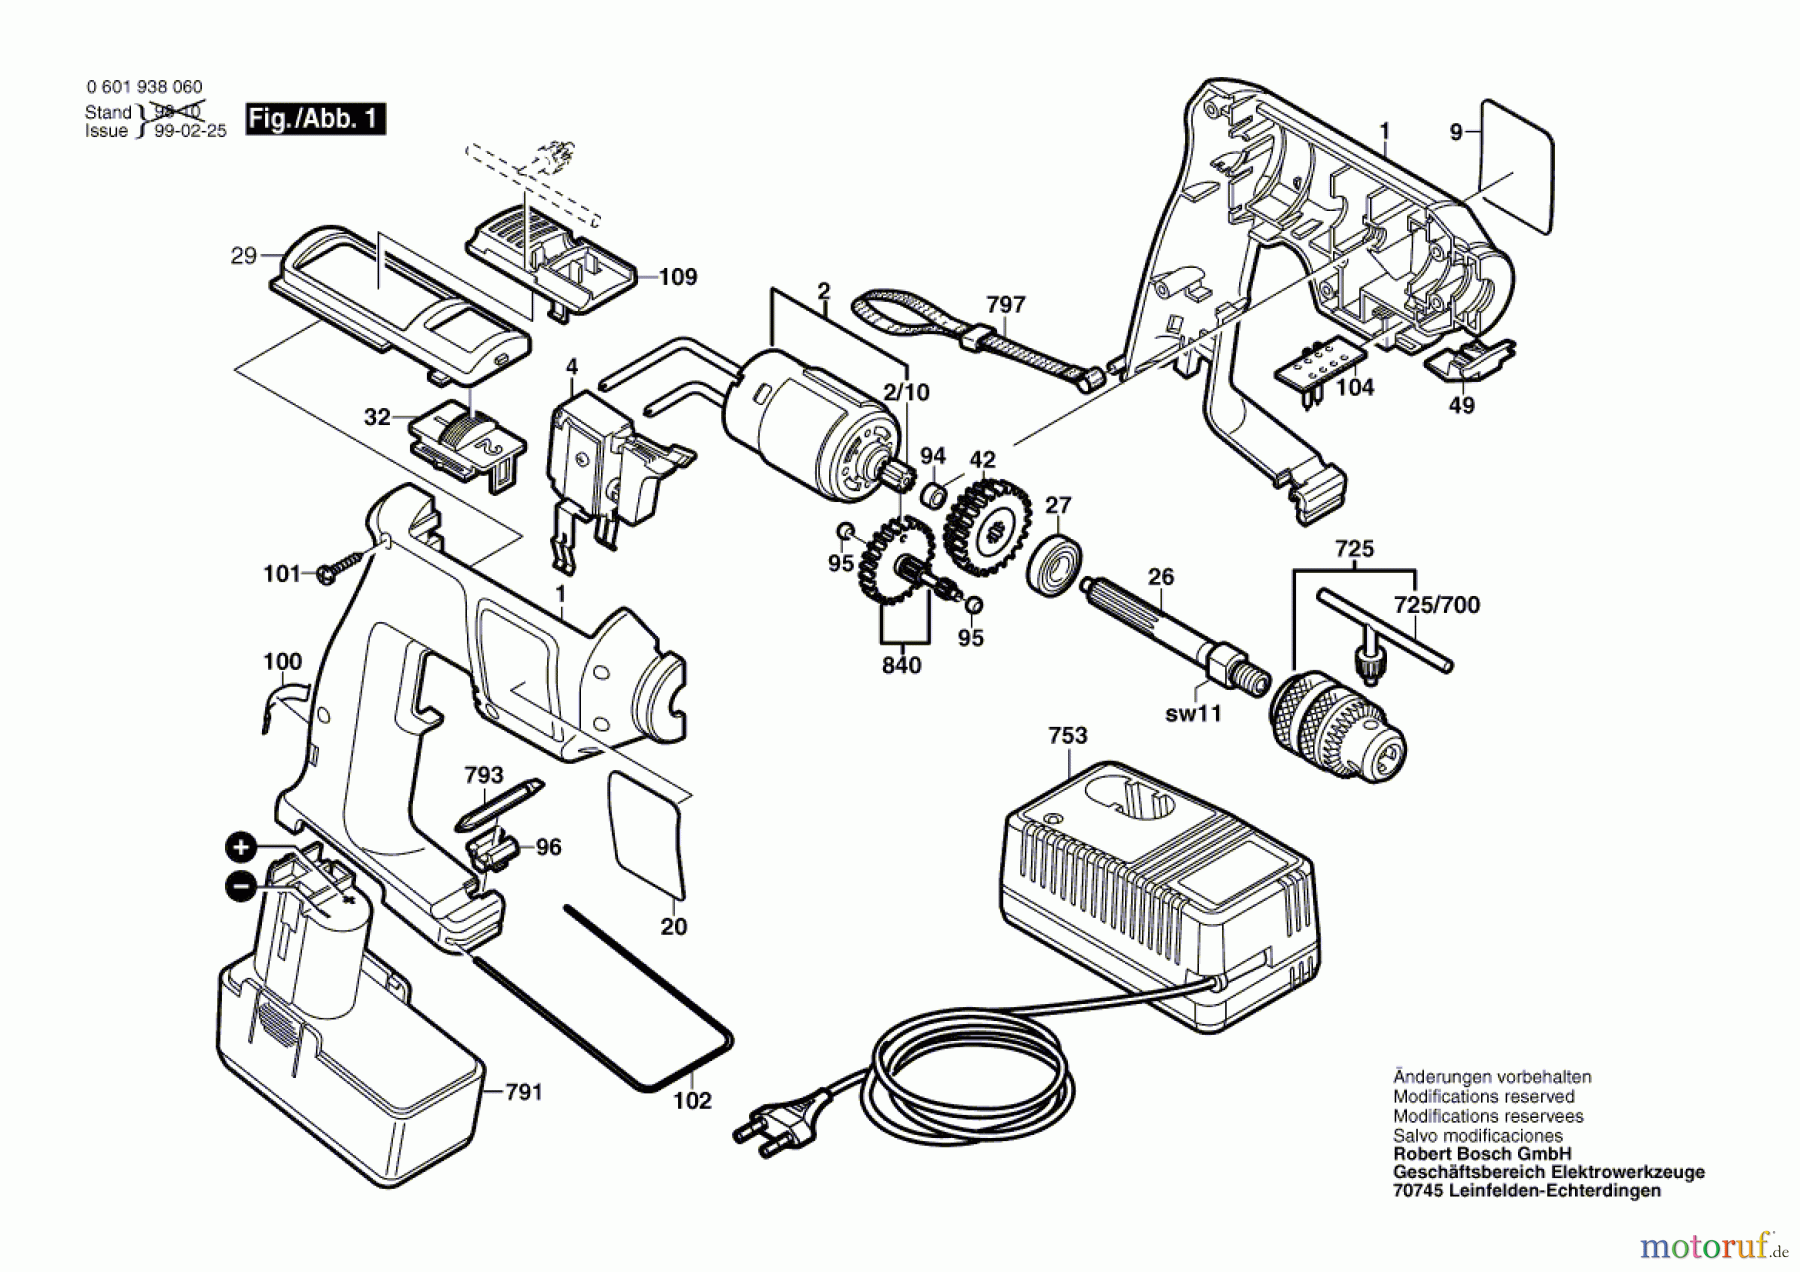  Bosch Akku Werkzeug Gw-Akku-Bohrmaschine GBM 7,2 V-2 Seite 1